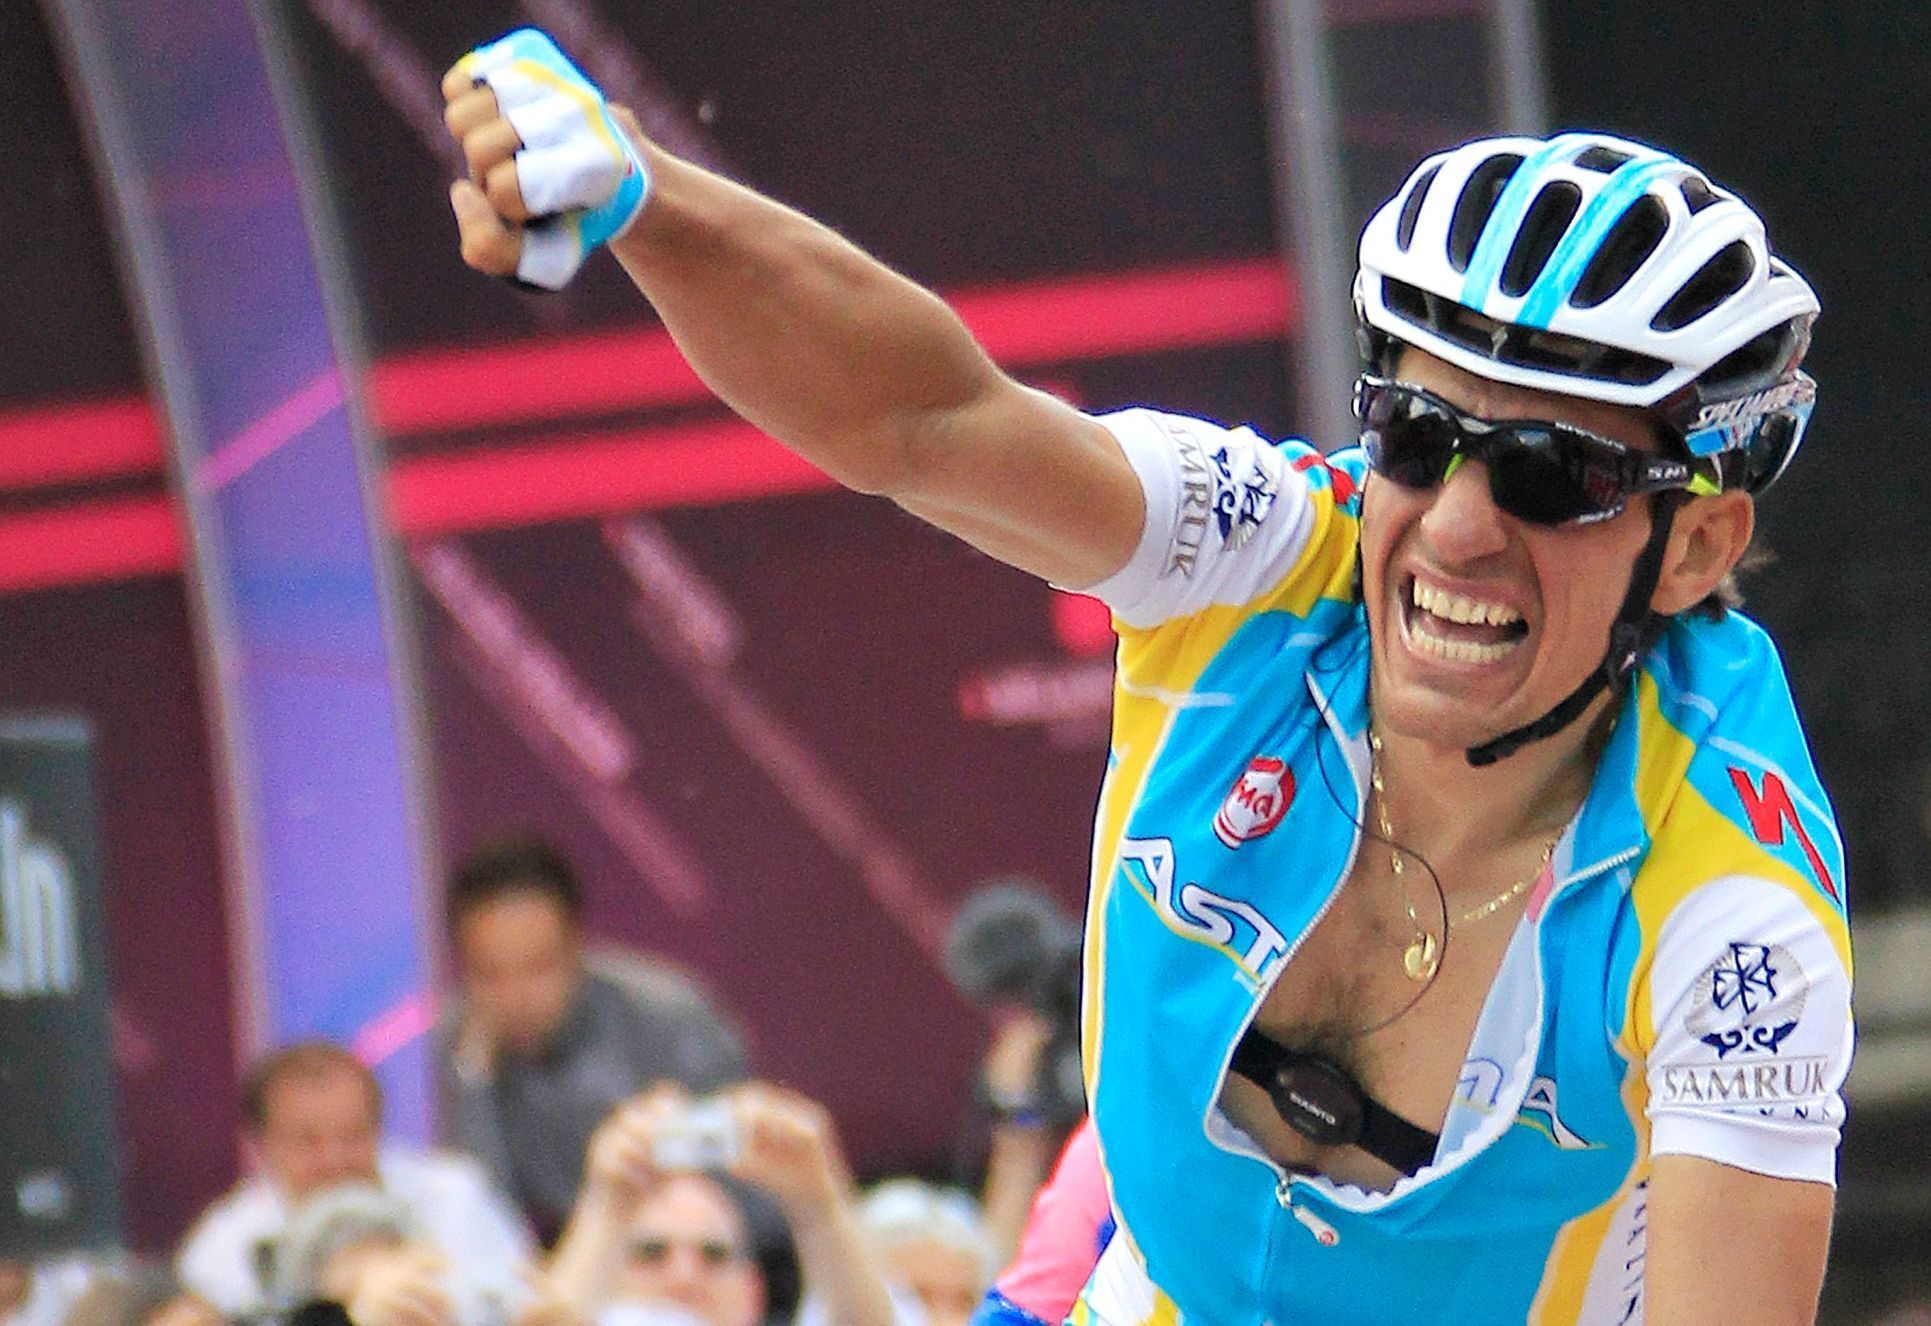 Paulo Tiralongo slaví triumf na Giro d´Italia